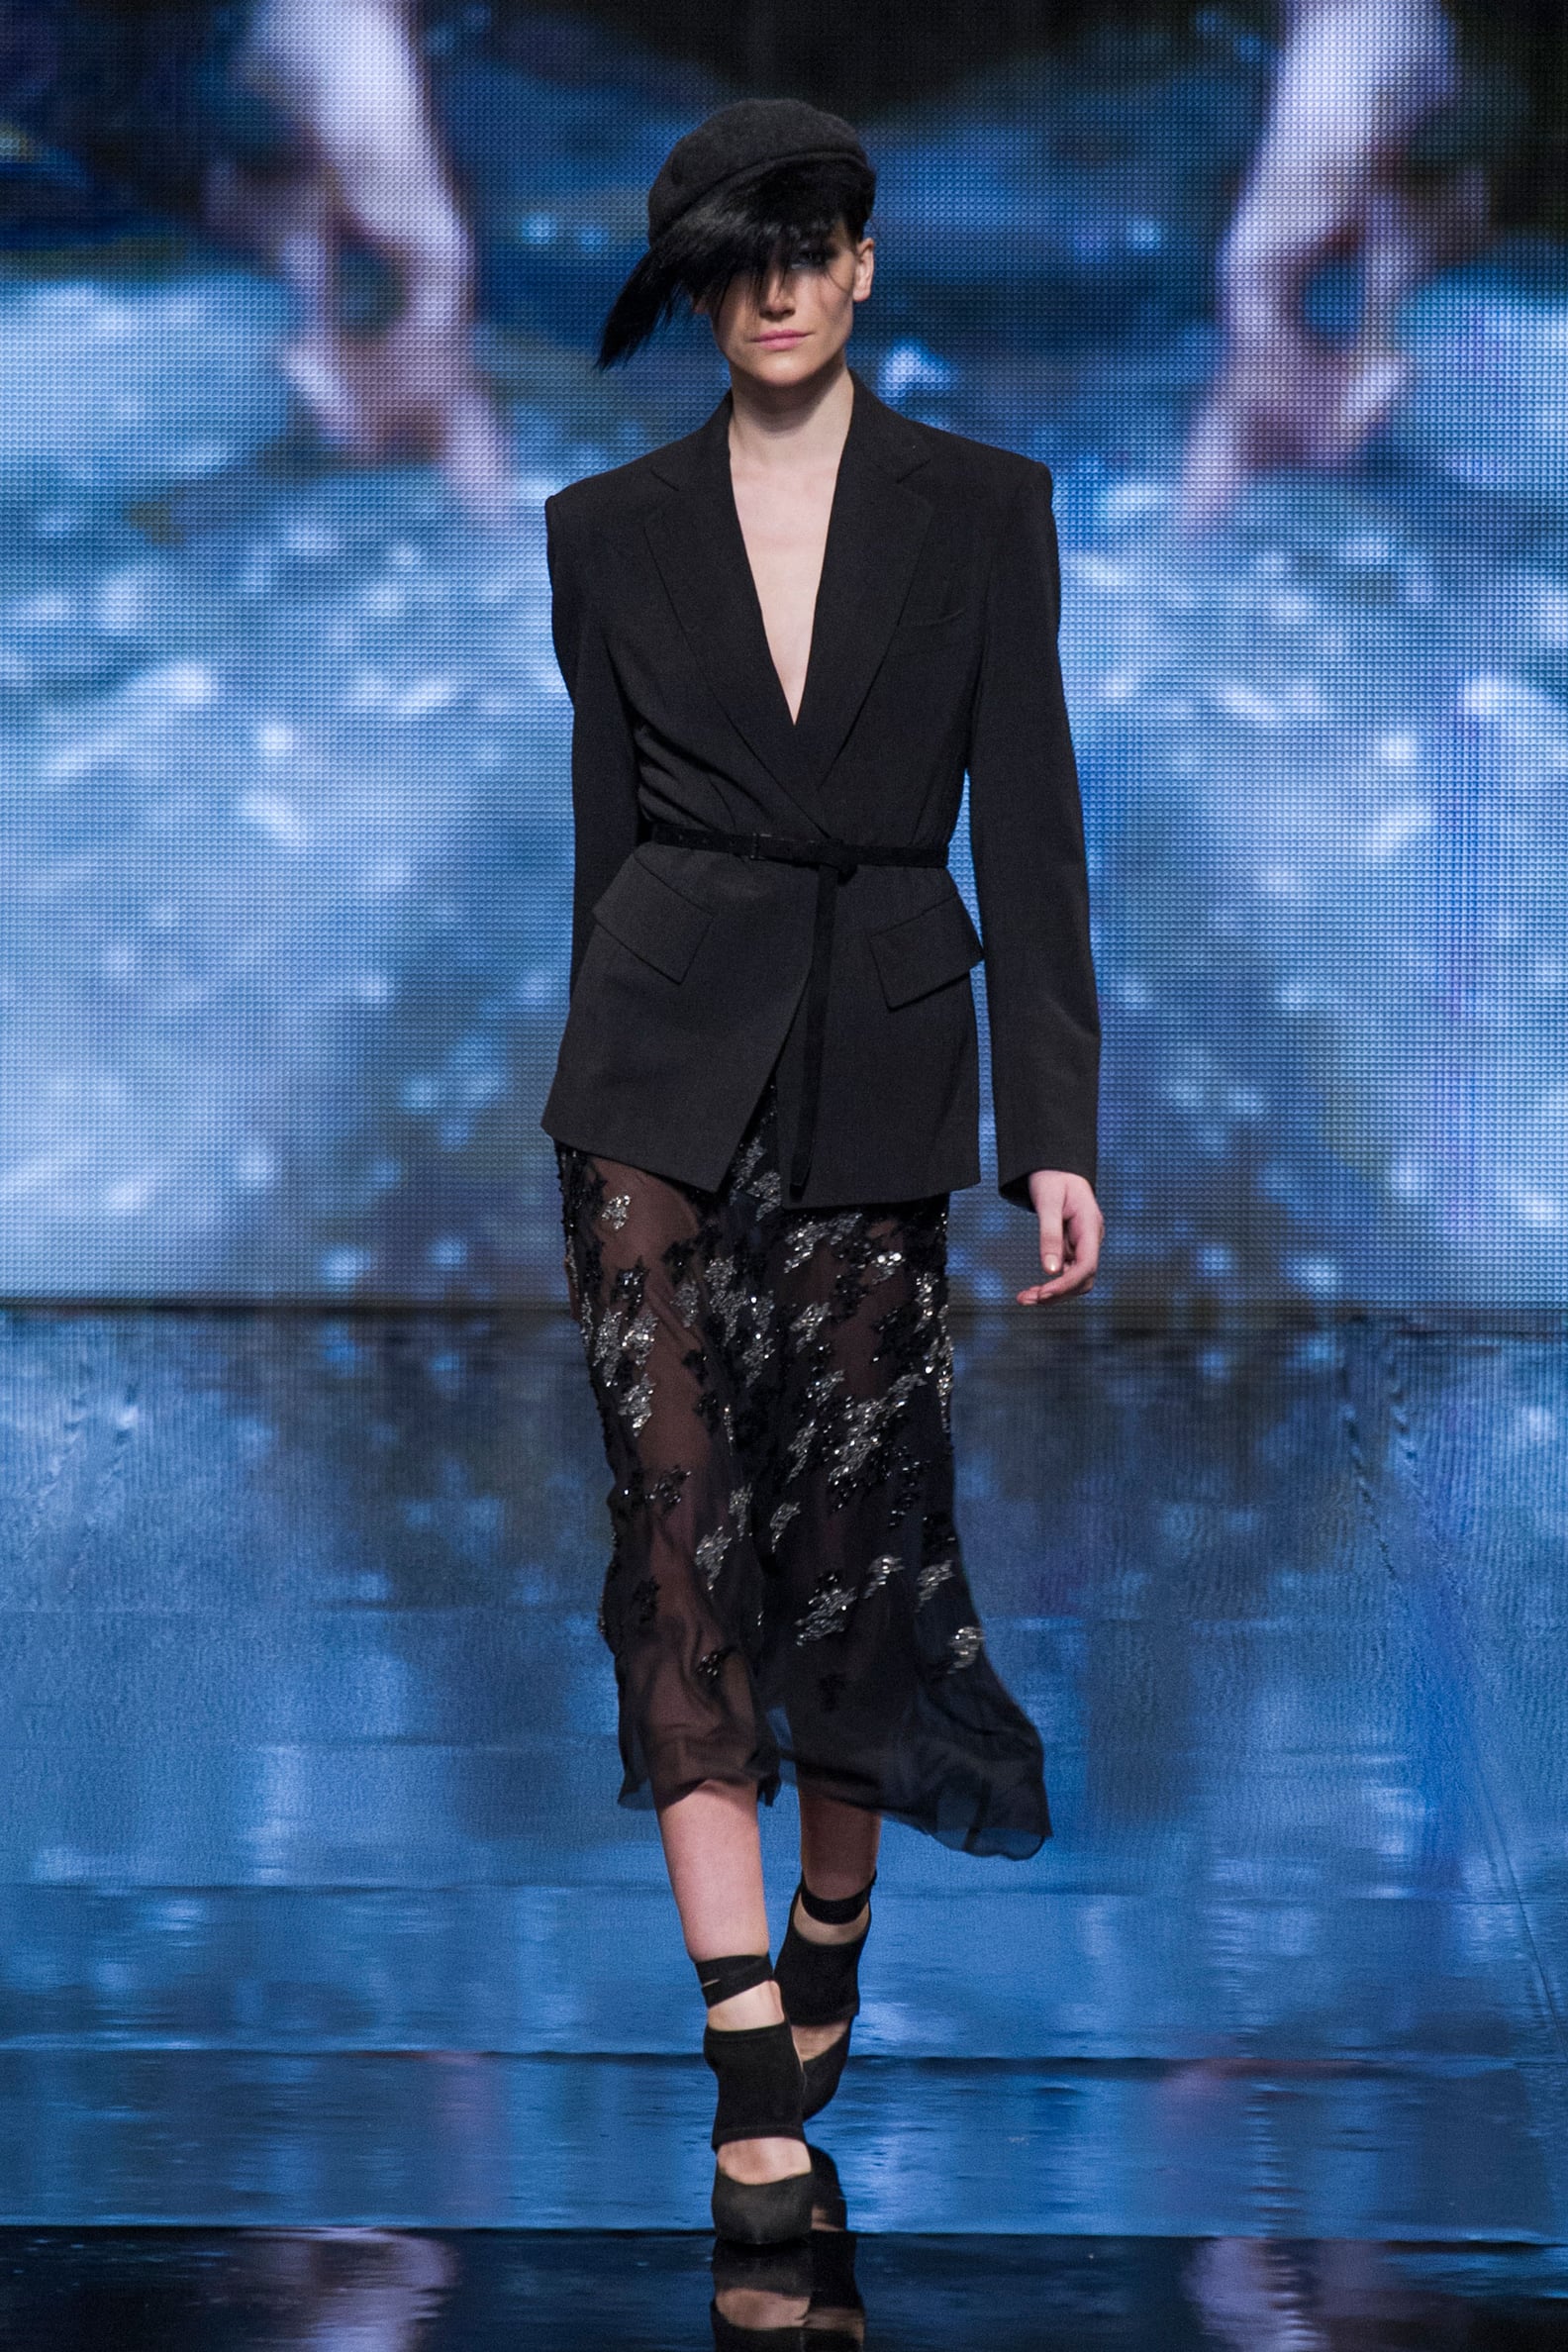 Donna Karan NY Fall 2014 Runway Show | NY Fashion Week | POPSUGAR Fashion